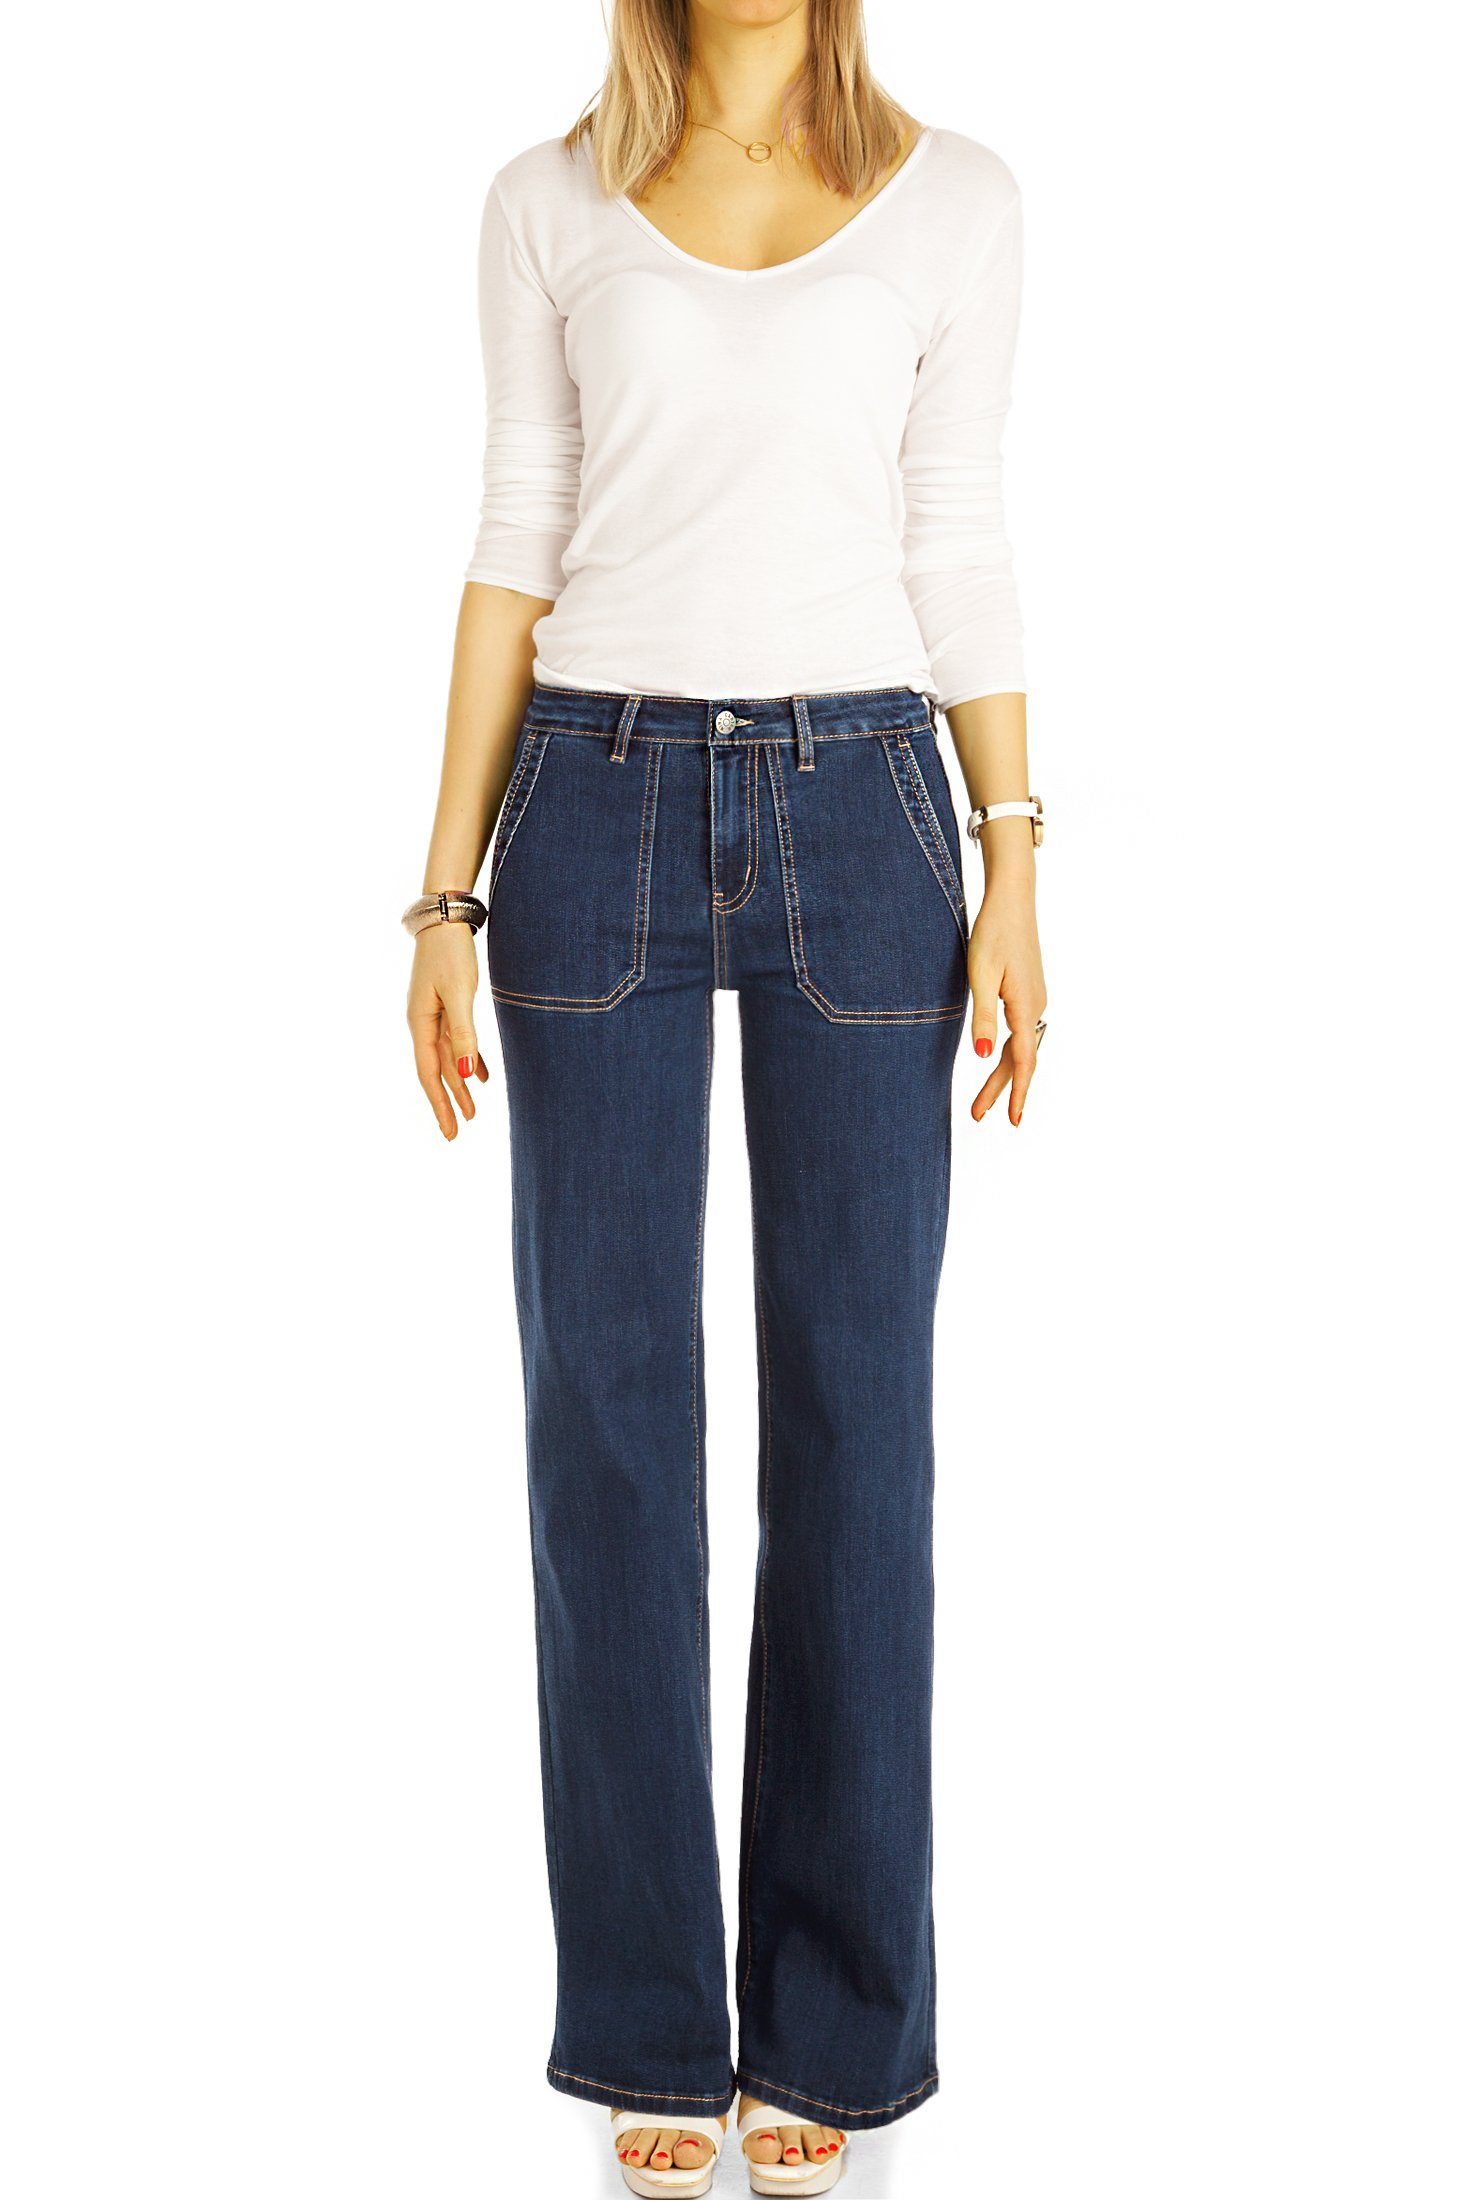 Hosen Stretch-Anteil, - styled mit Bootcut - waist Passform Damen j31k straight Jeans, 5-Pocket-Style medium dunkelblau be Bootcut-Jeans